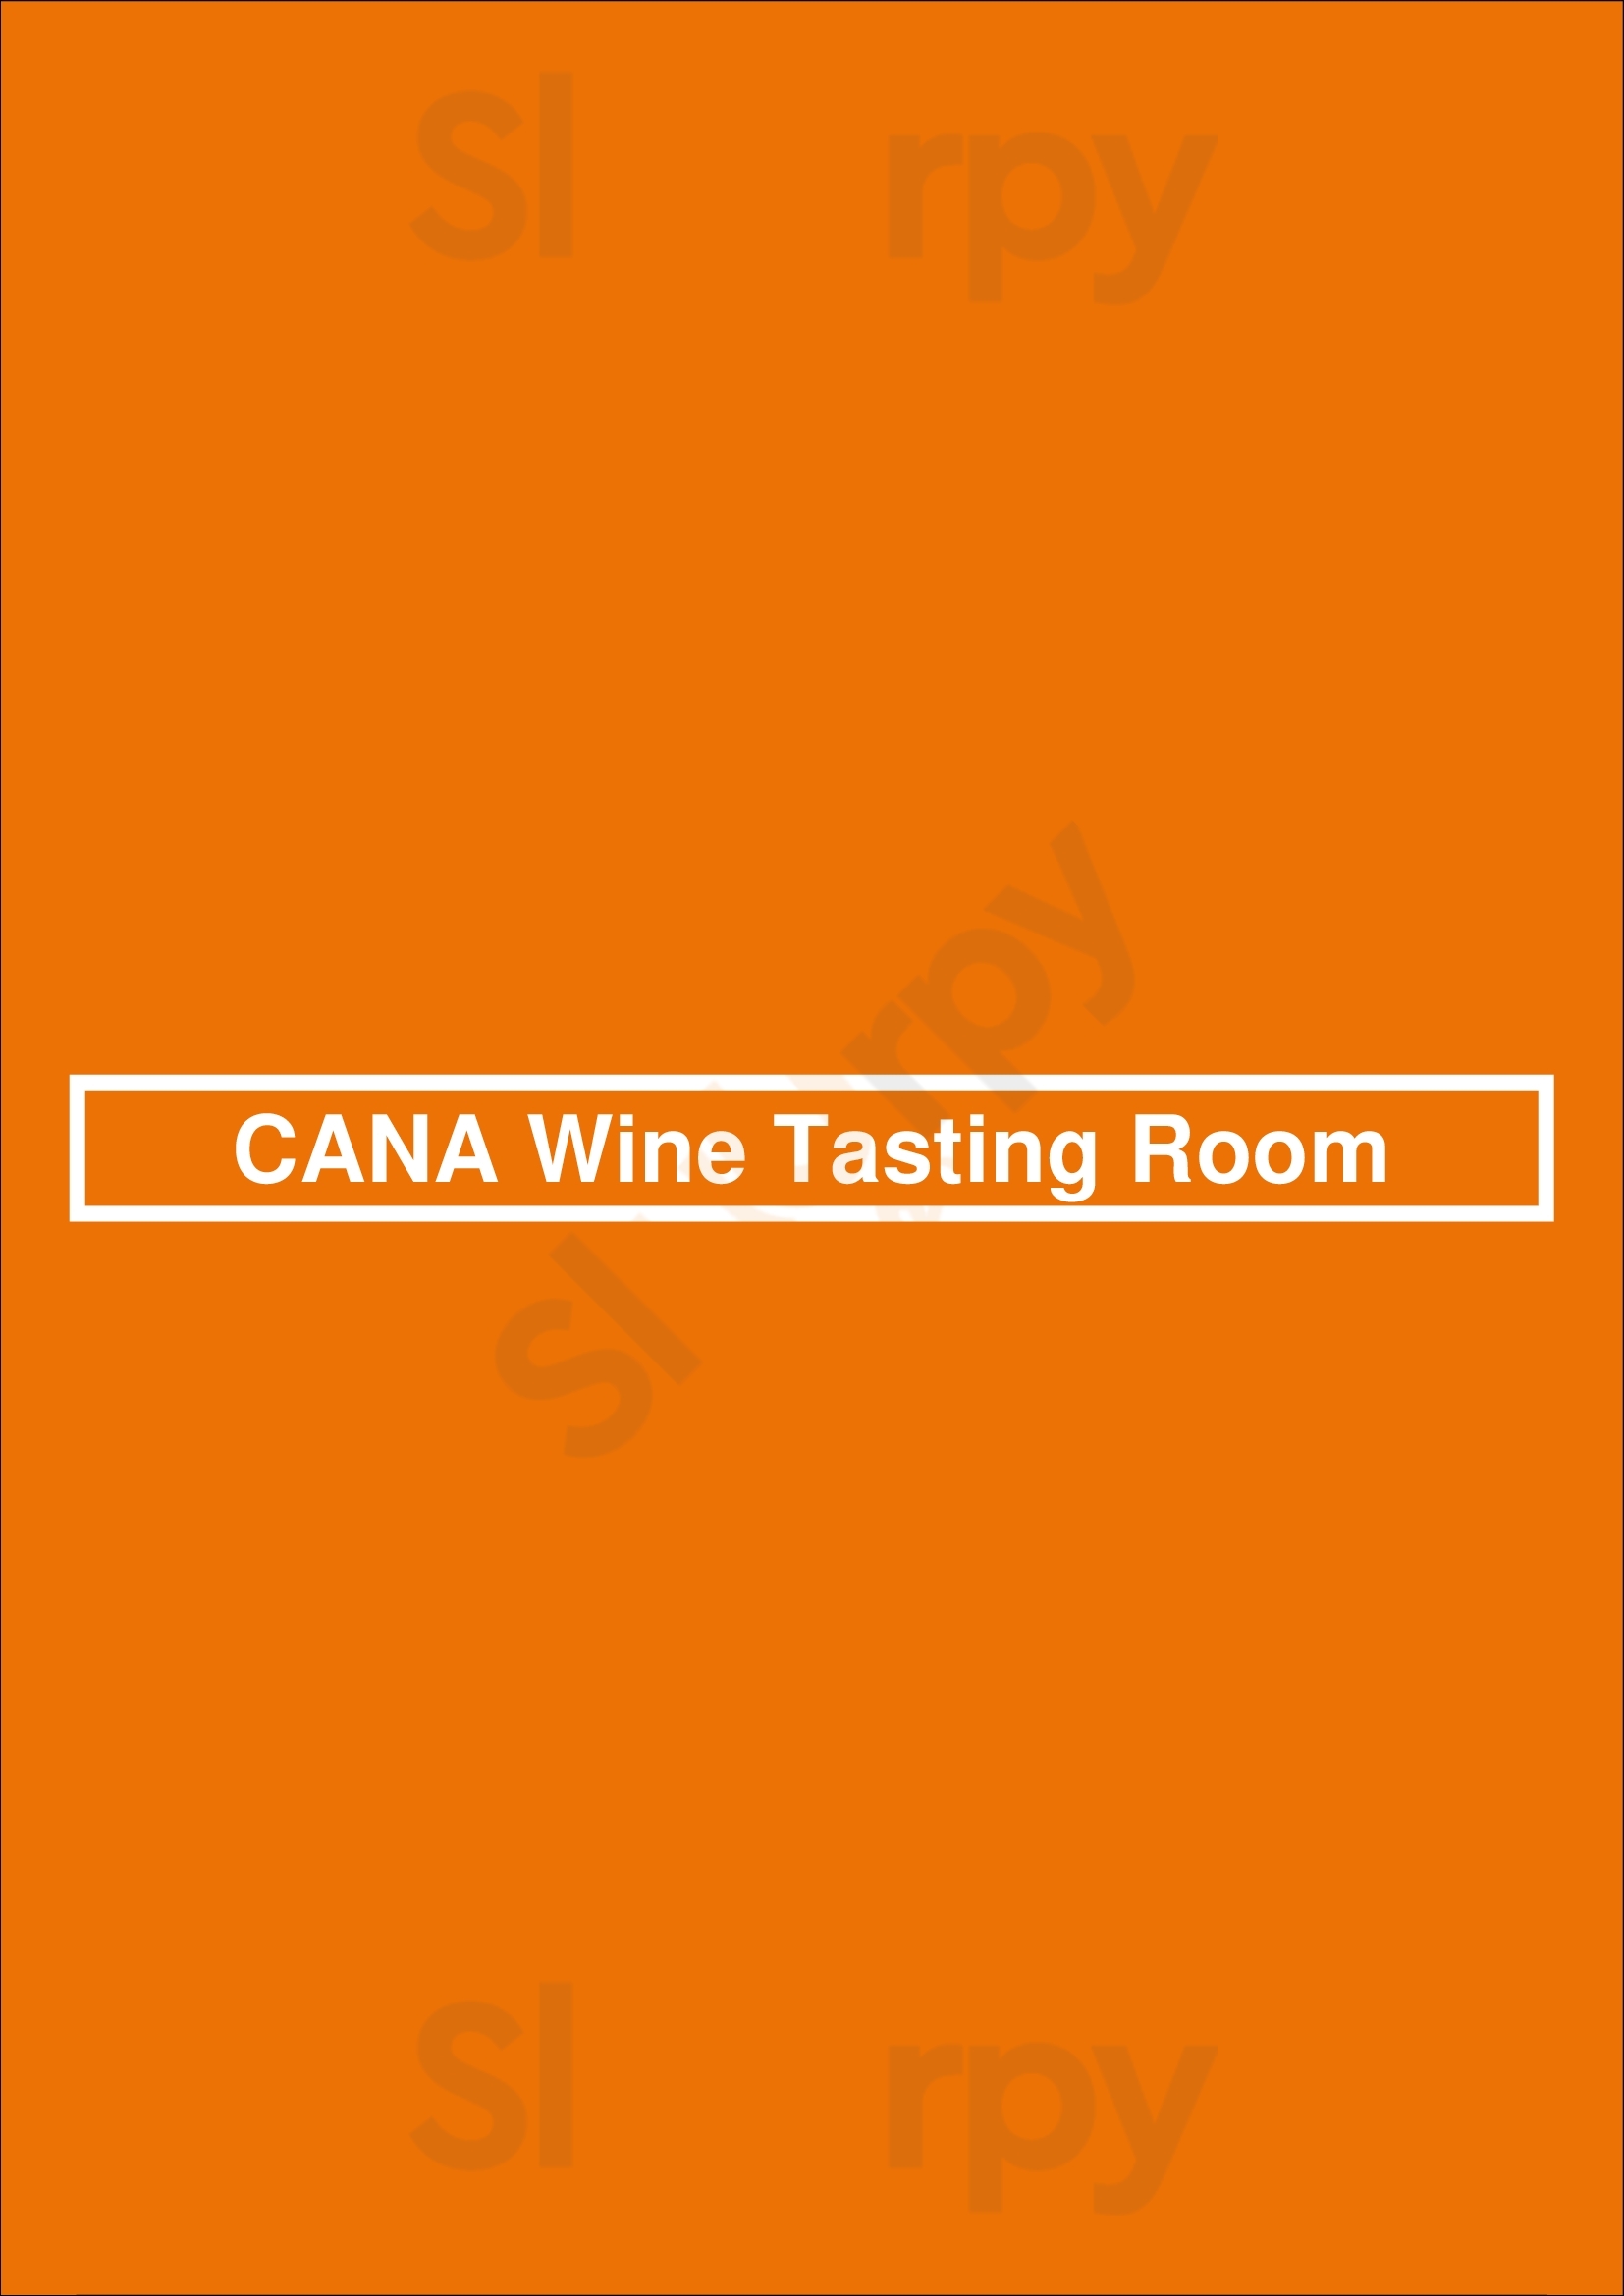 Cana Wine Tasting Room Buenos Aires Menu - 1